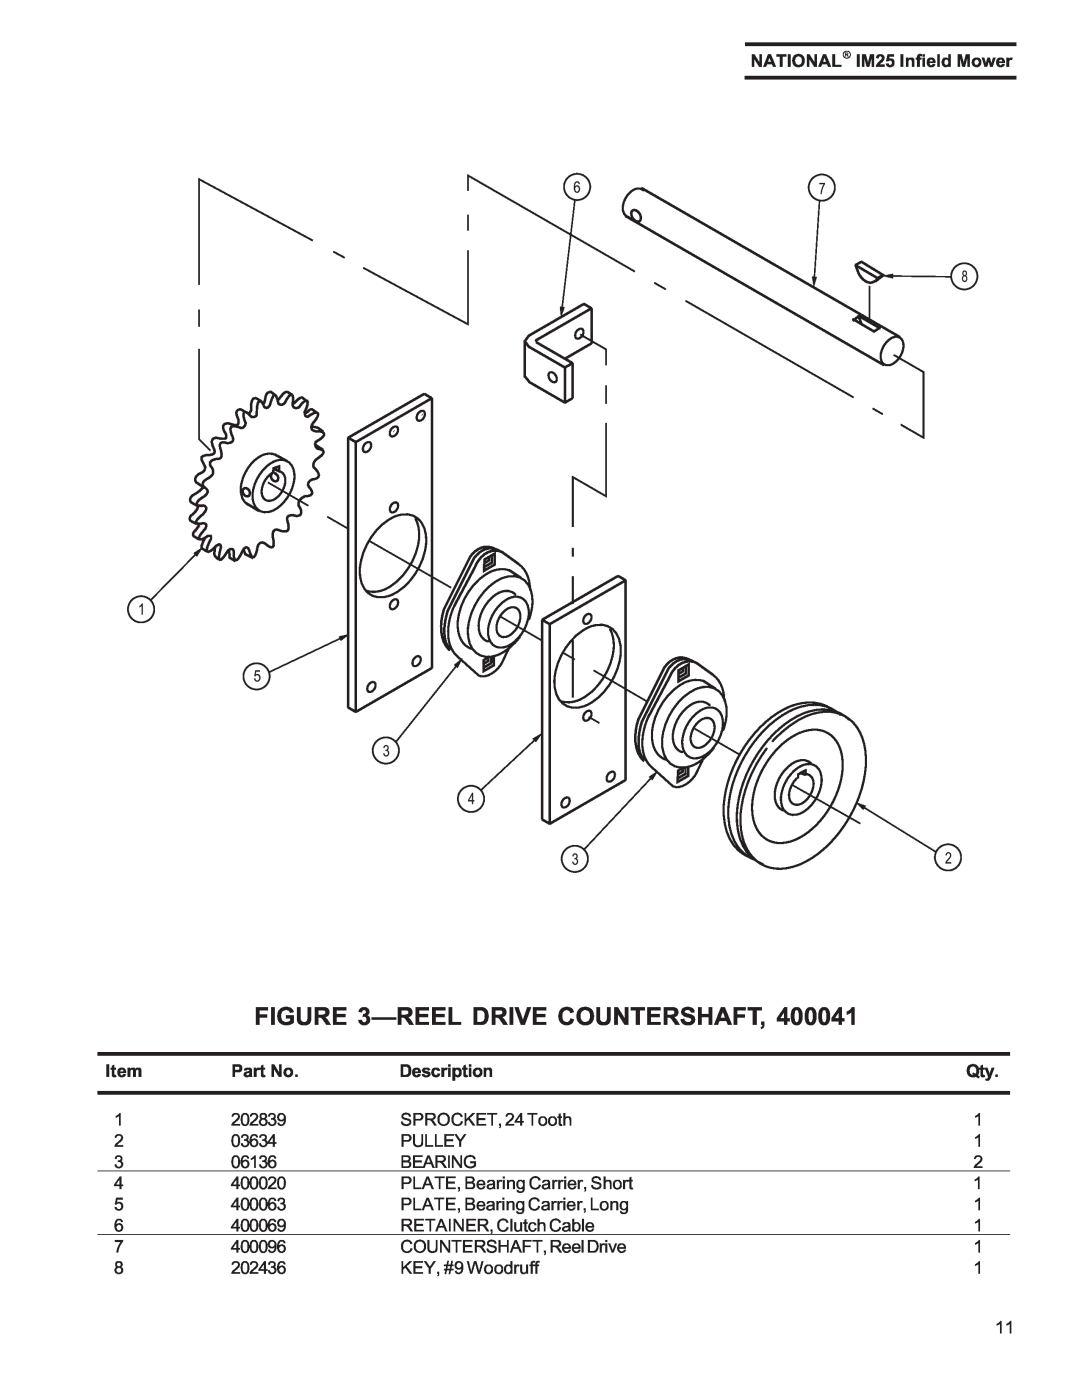 National Mower IM25 manual Reel Drive Countershaft 